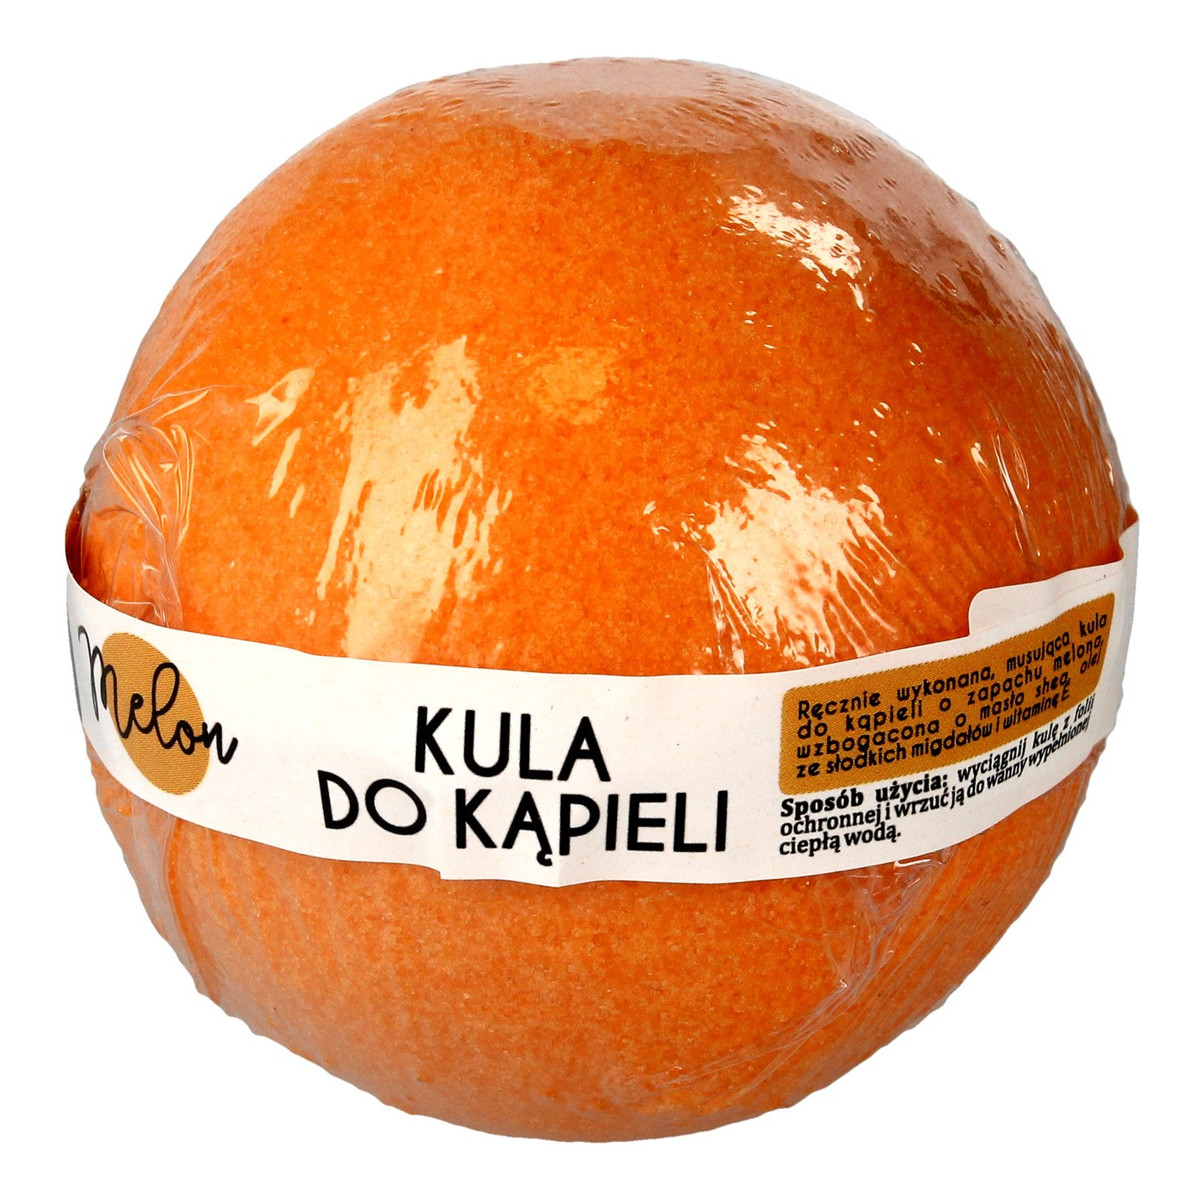 Laq Kula musująca do kąpieli Melon - pomarańcza 100g